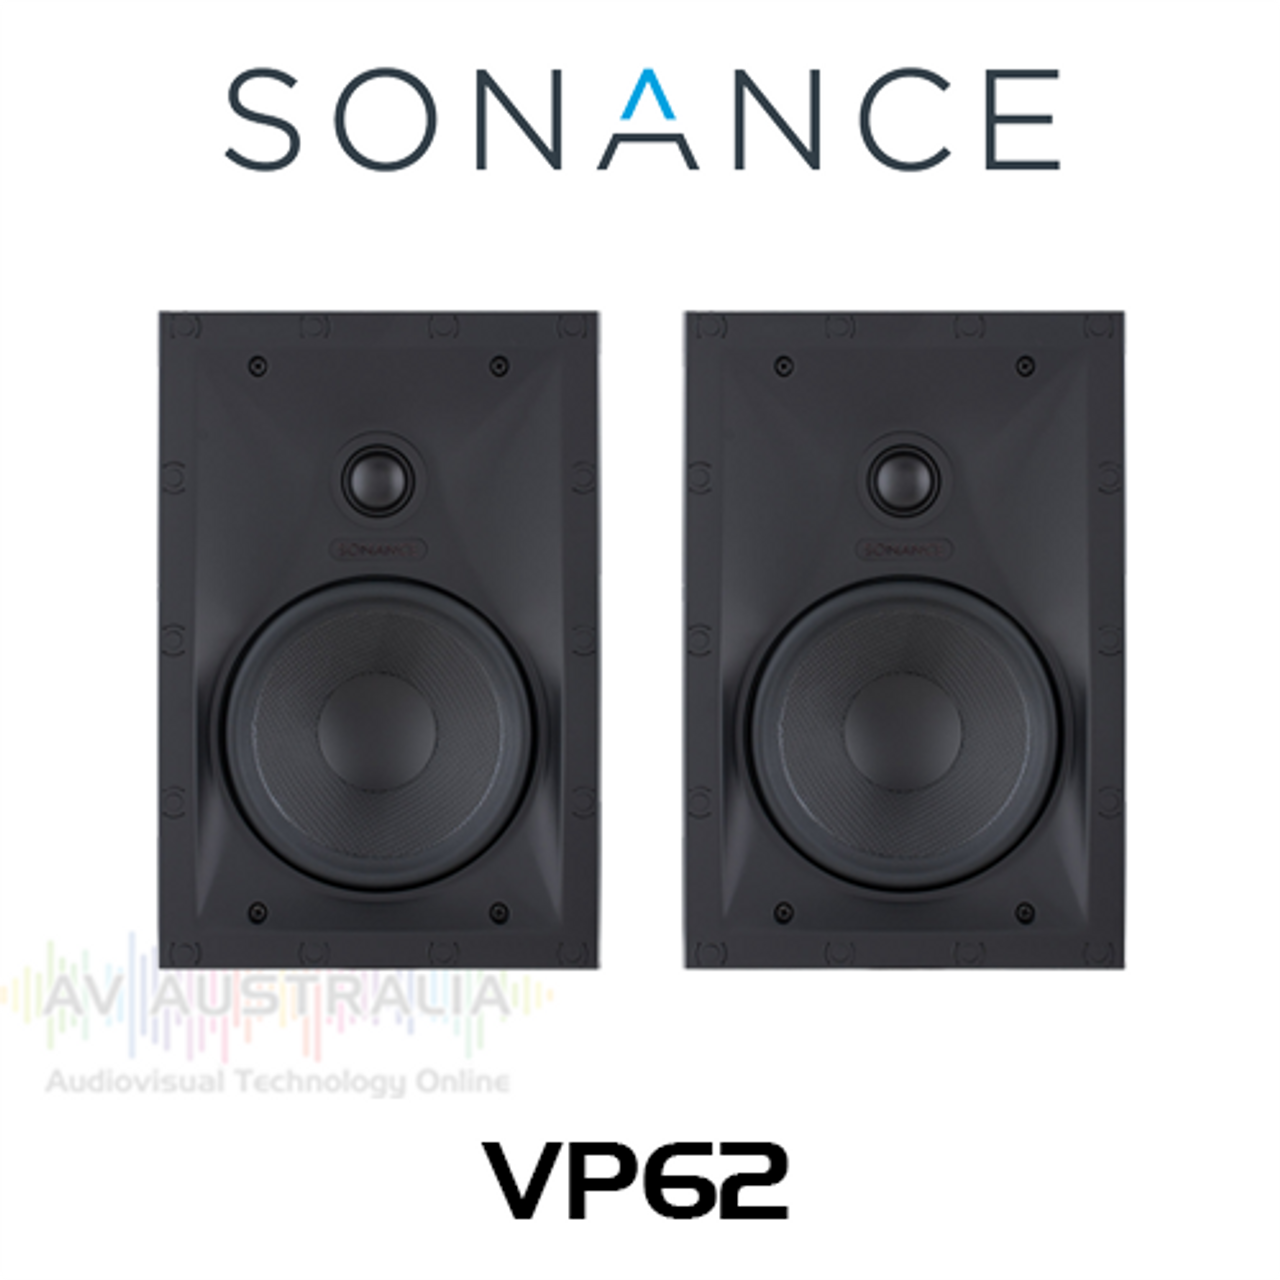 Sonance VP62 6" In-Wall Rectangular Speakers (Pair)